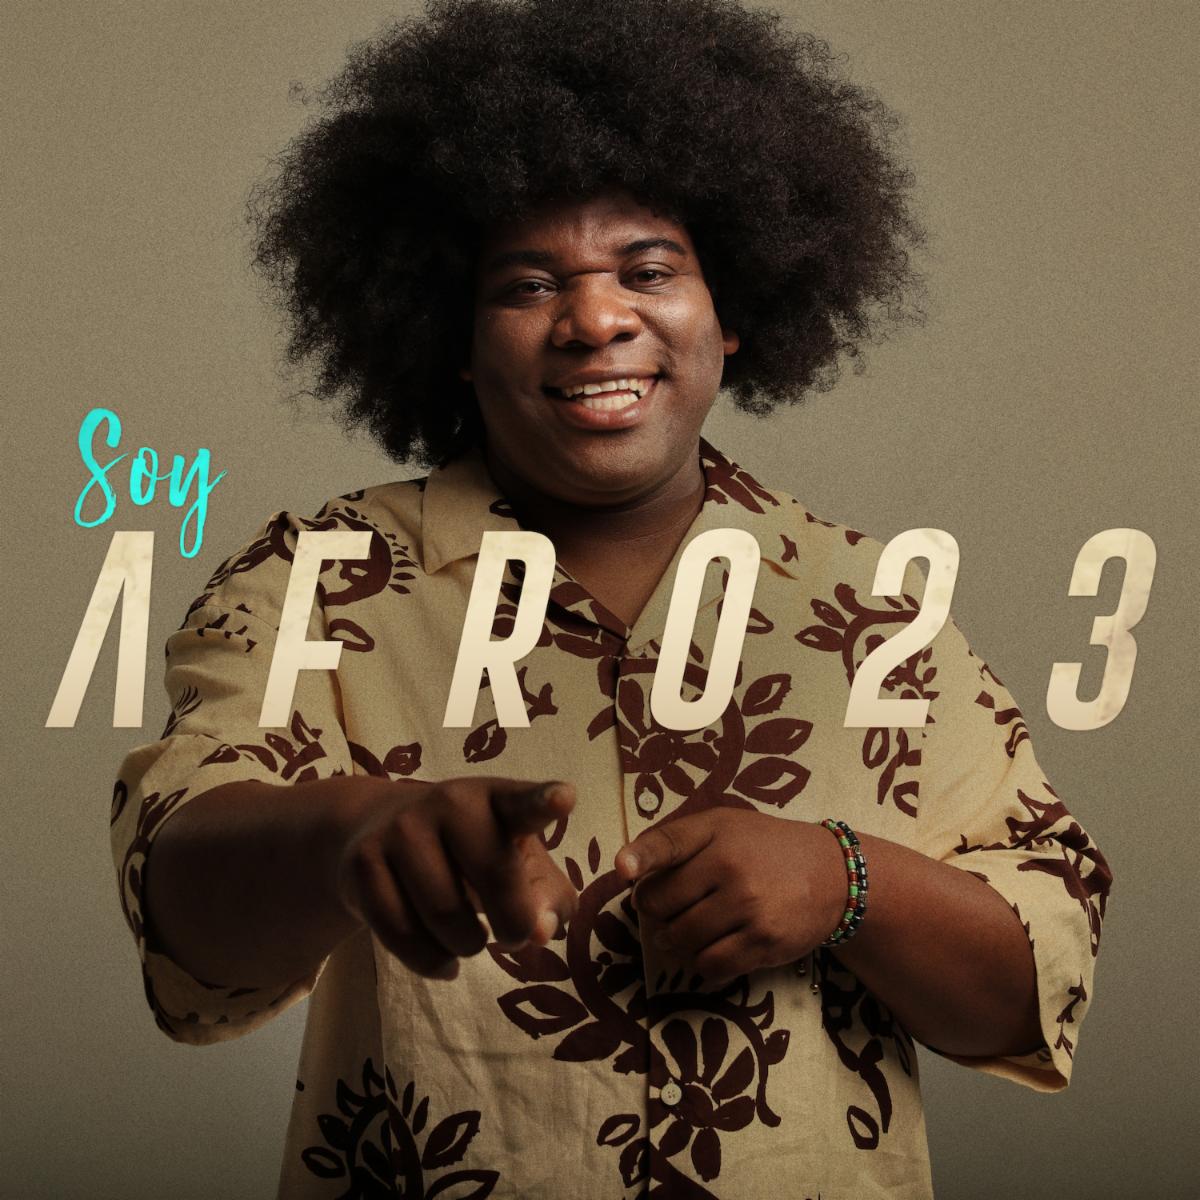 AFRO 23 lanza su primer sencillo “Soy Afro 23”